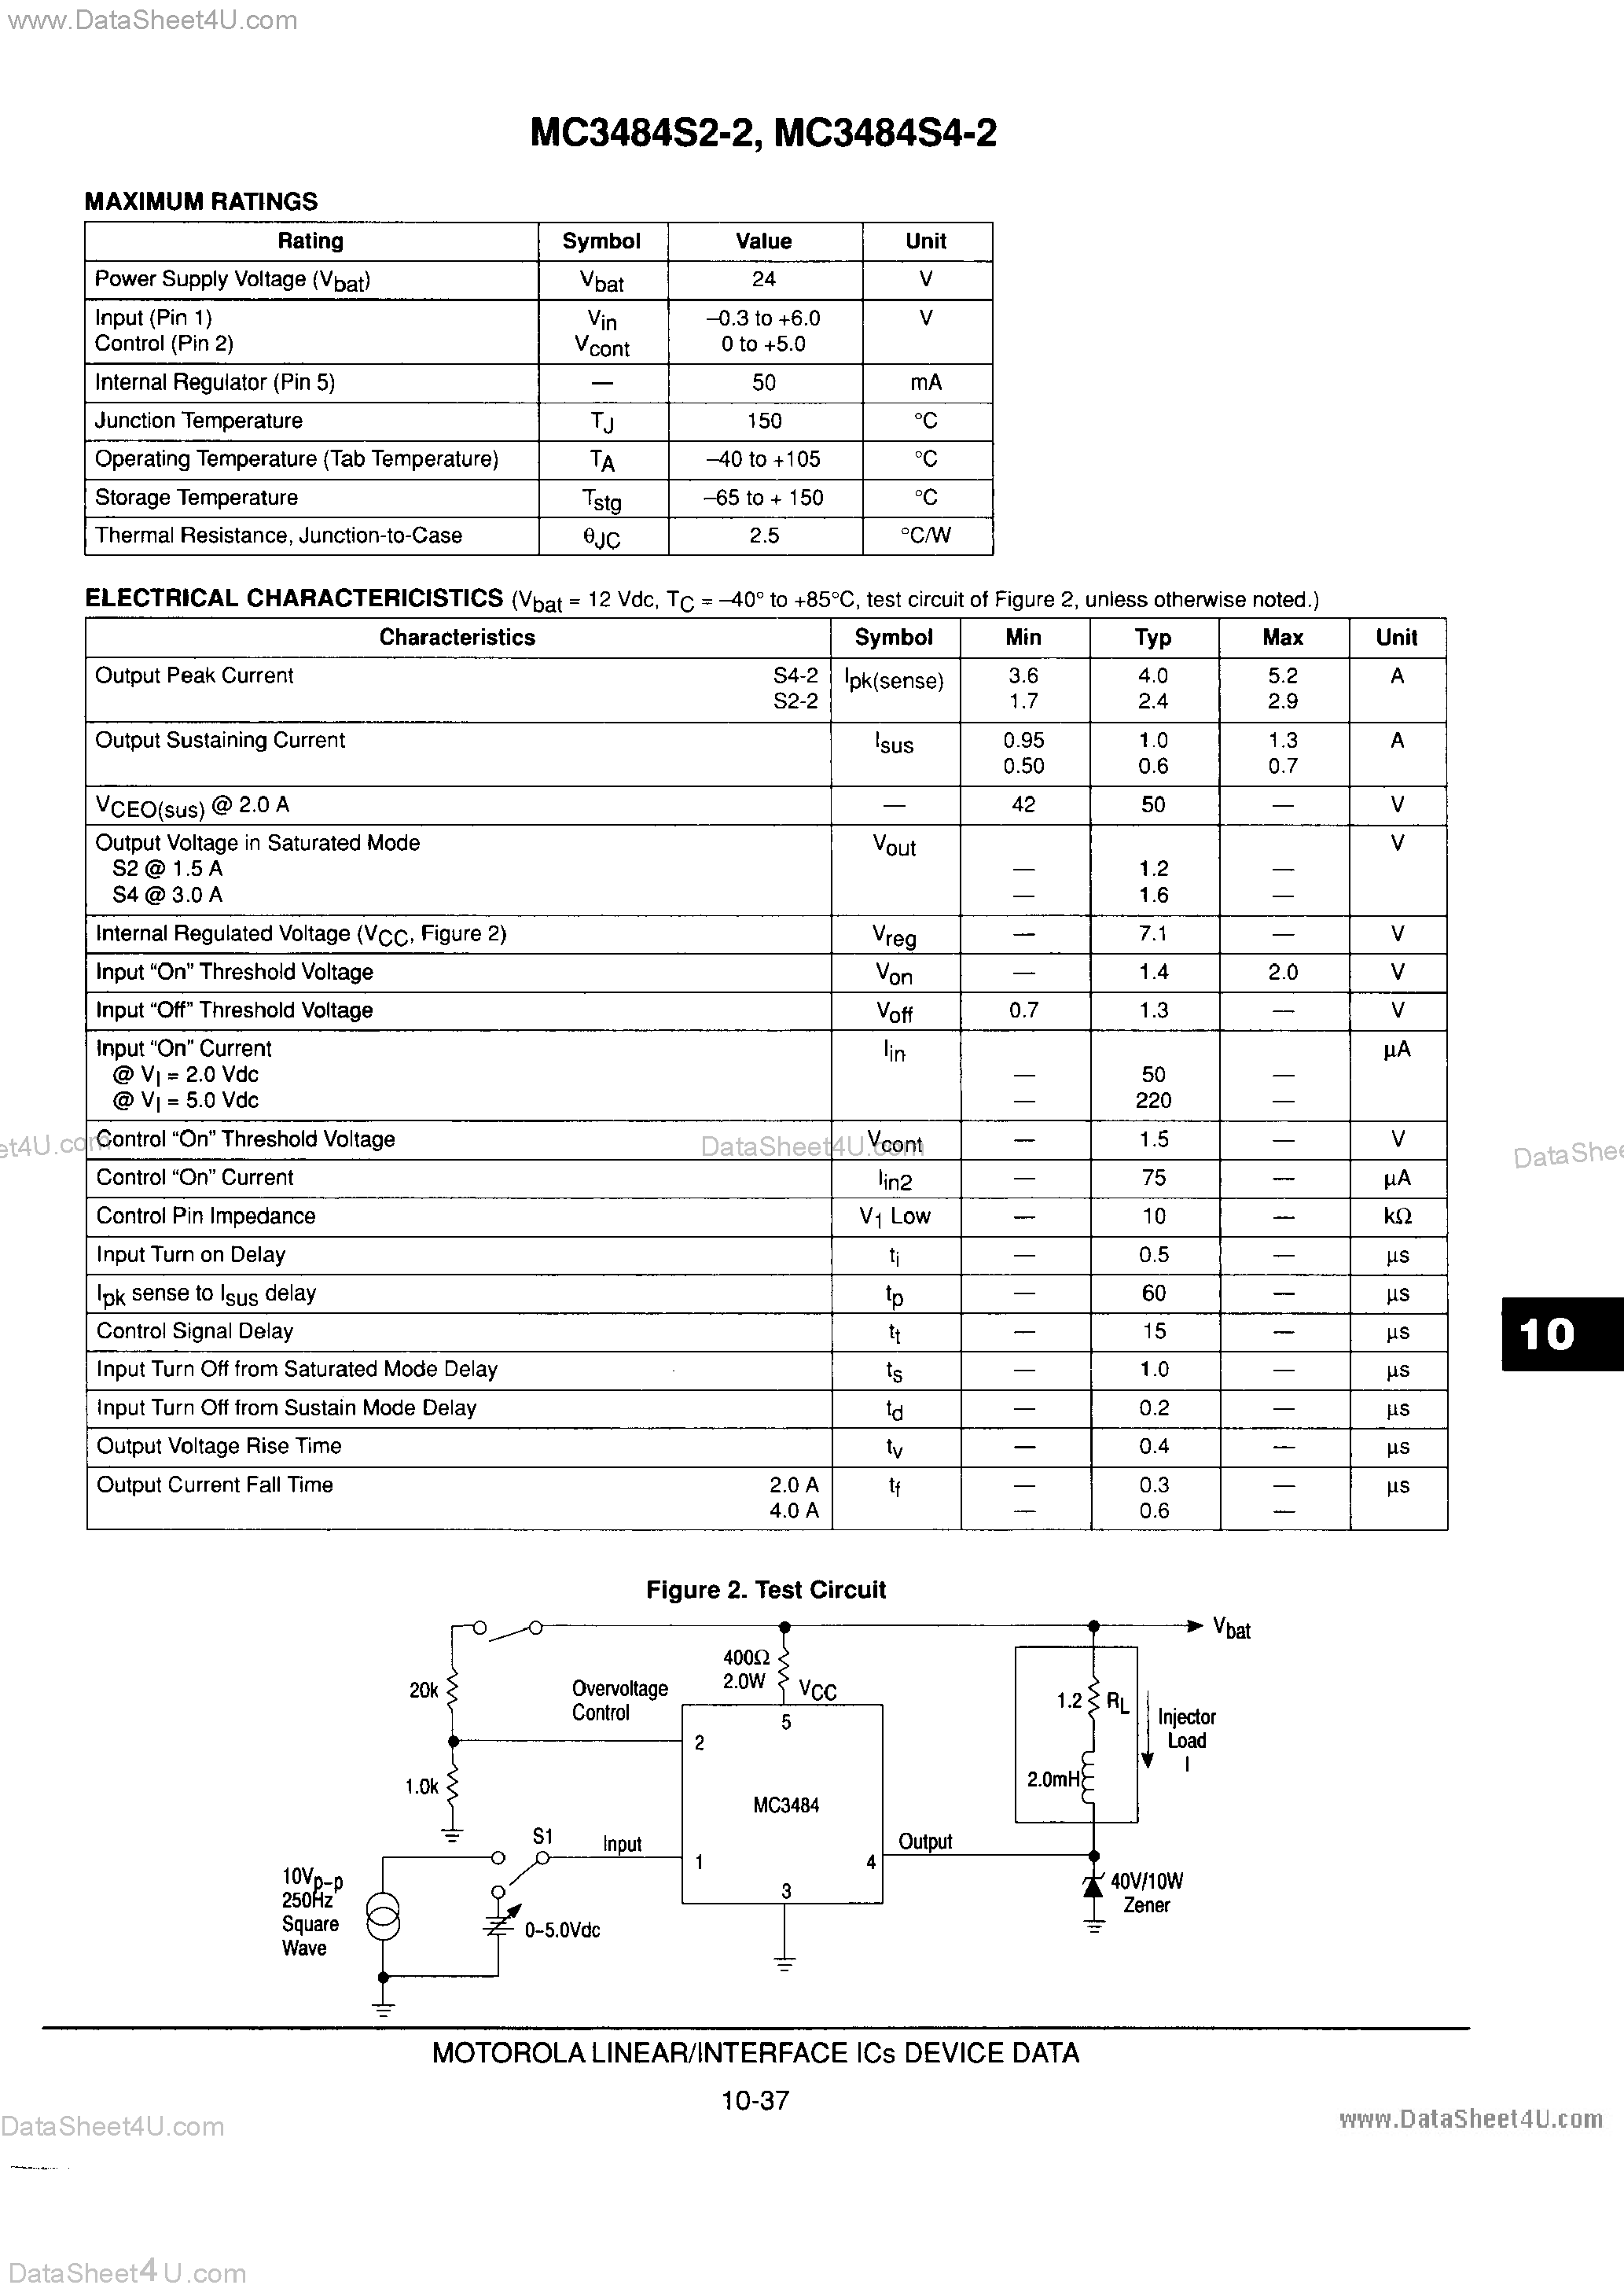 Даташит MC3484S2-2 - (MC3484S2-2 / MC3484S4-2) Integrated Solenoid Driver страница 2